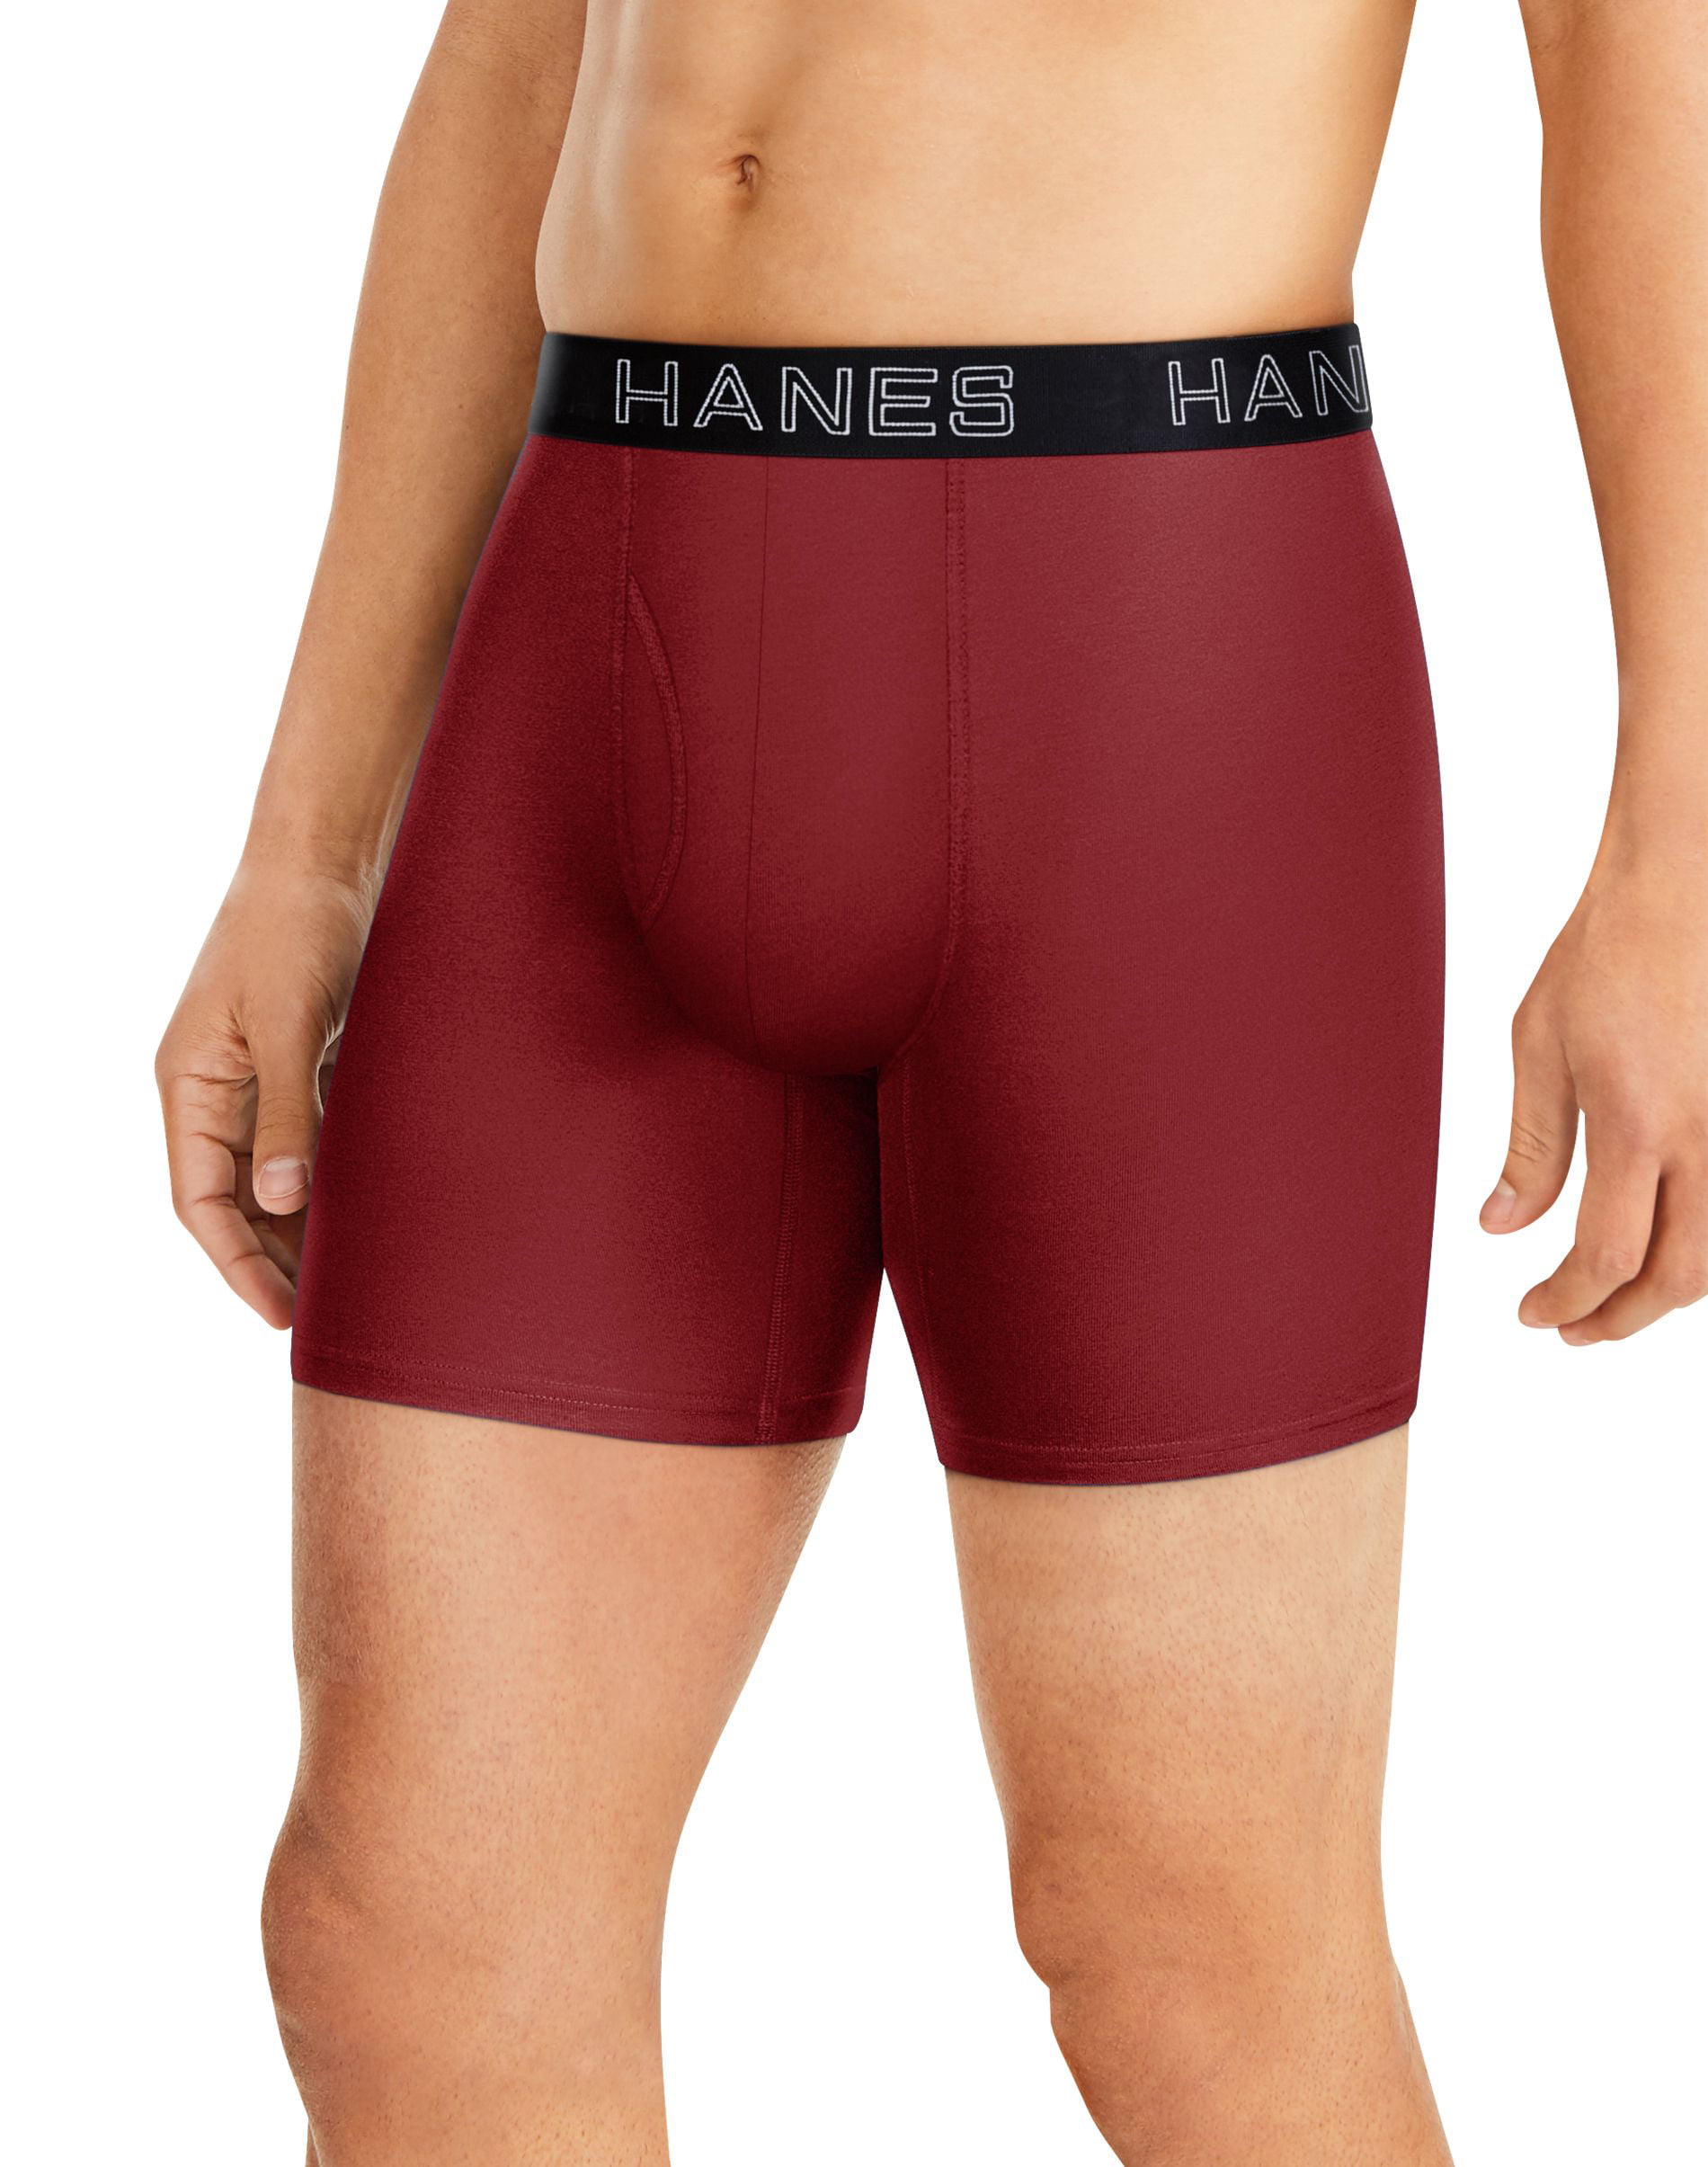 Men's Underwear Briefs Bamboo Comfort Pouch Support With Soft Flex Waistband